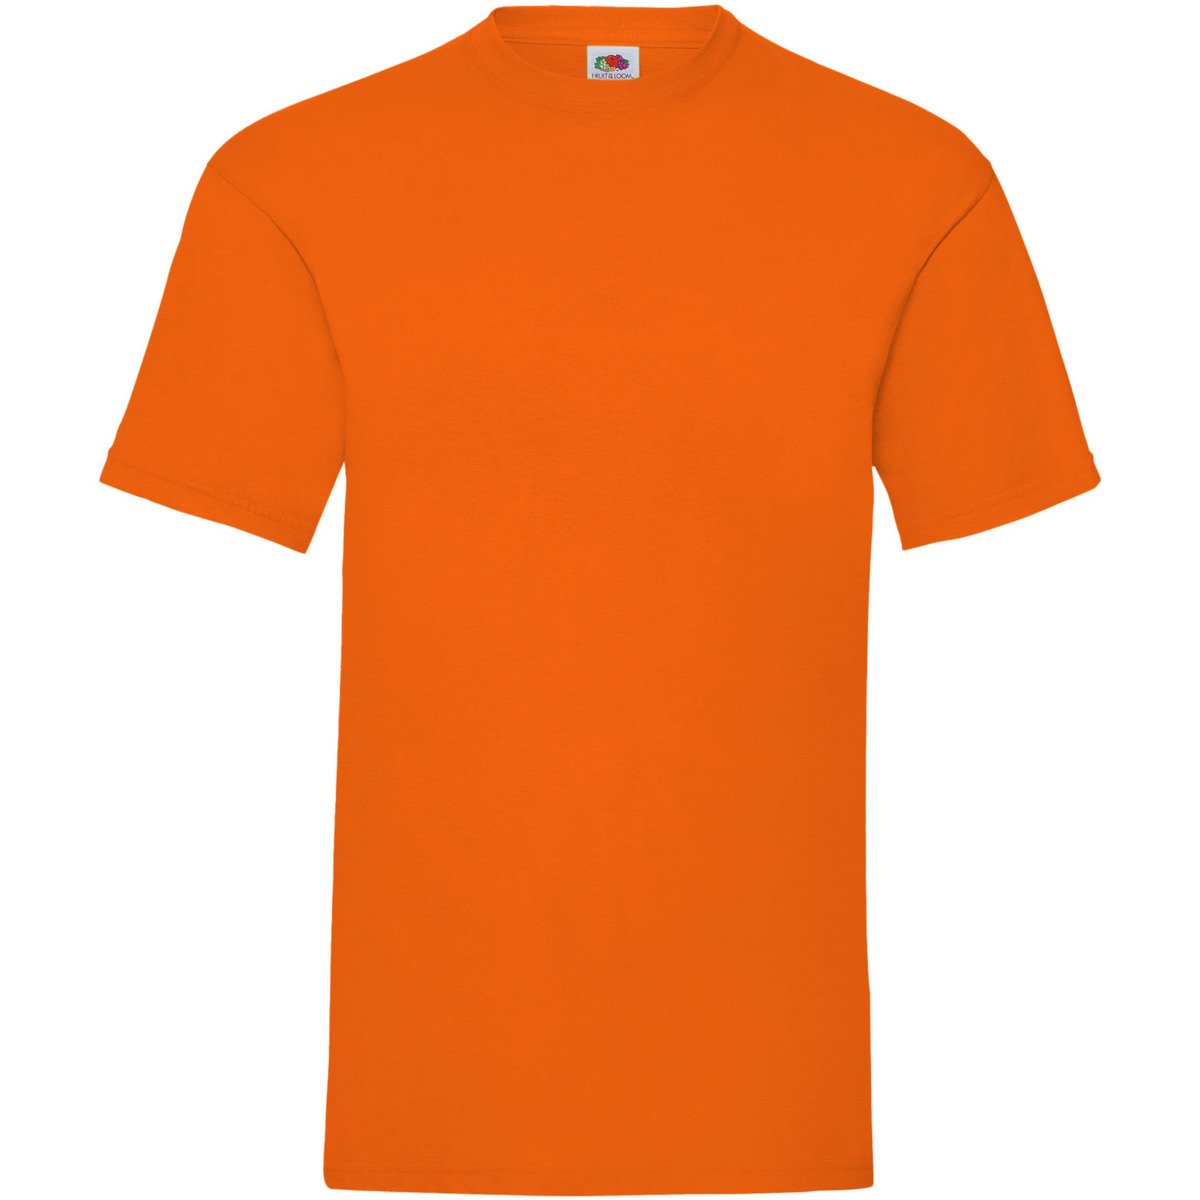 Vêtements Homme T-shirts manches courtes Fruit Of The Loom 61036 Orange